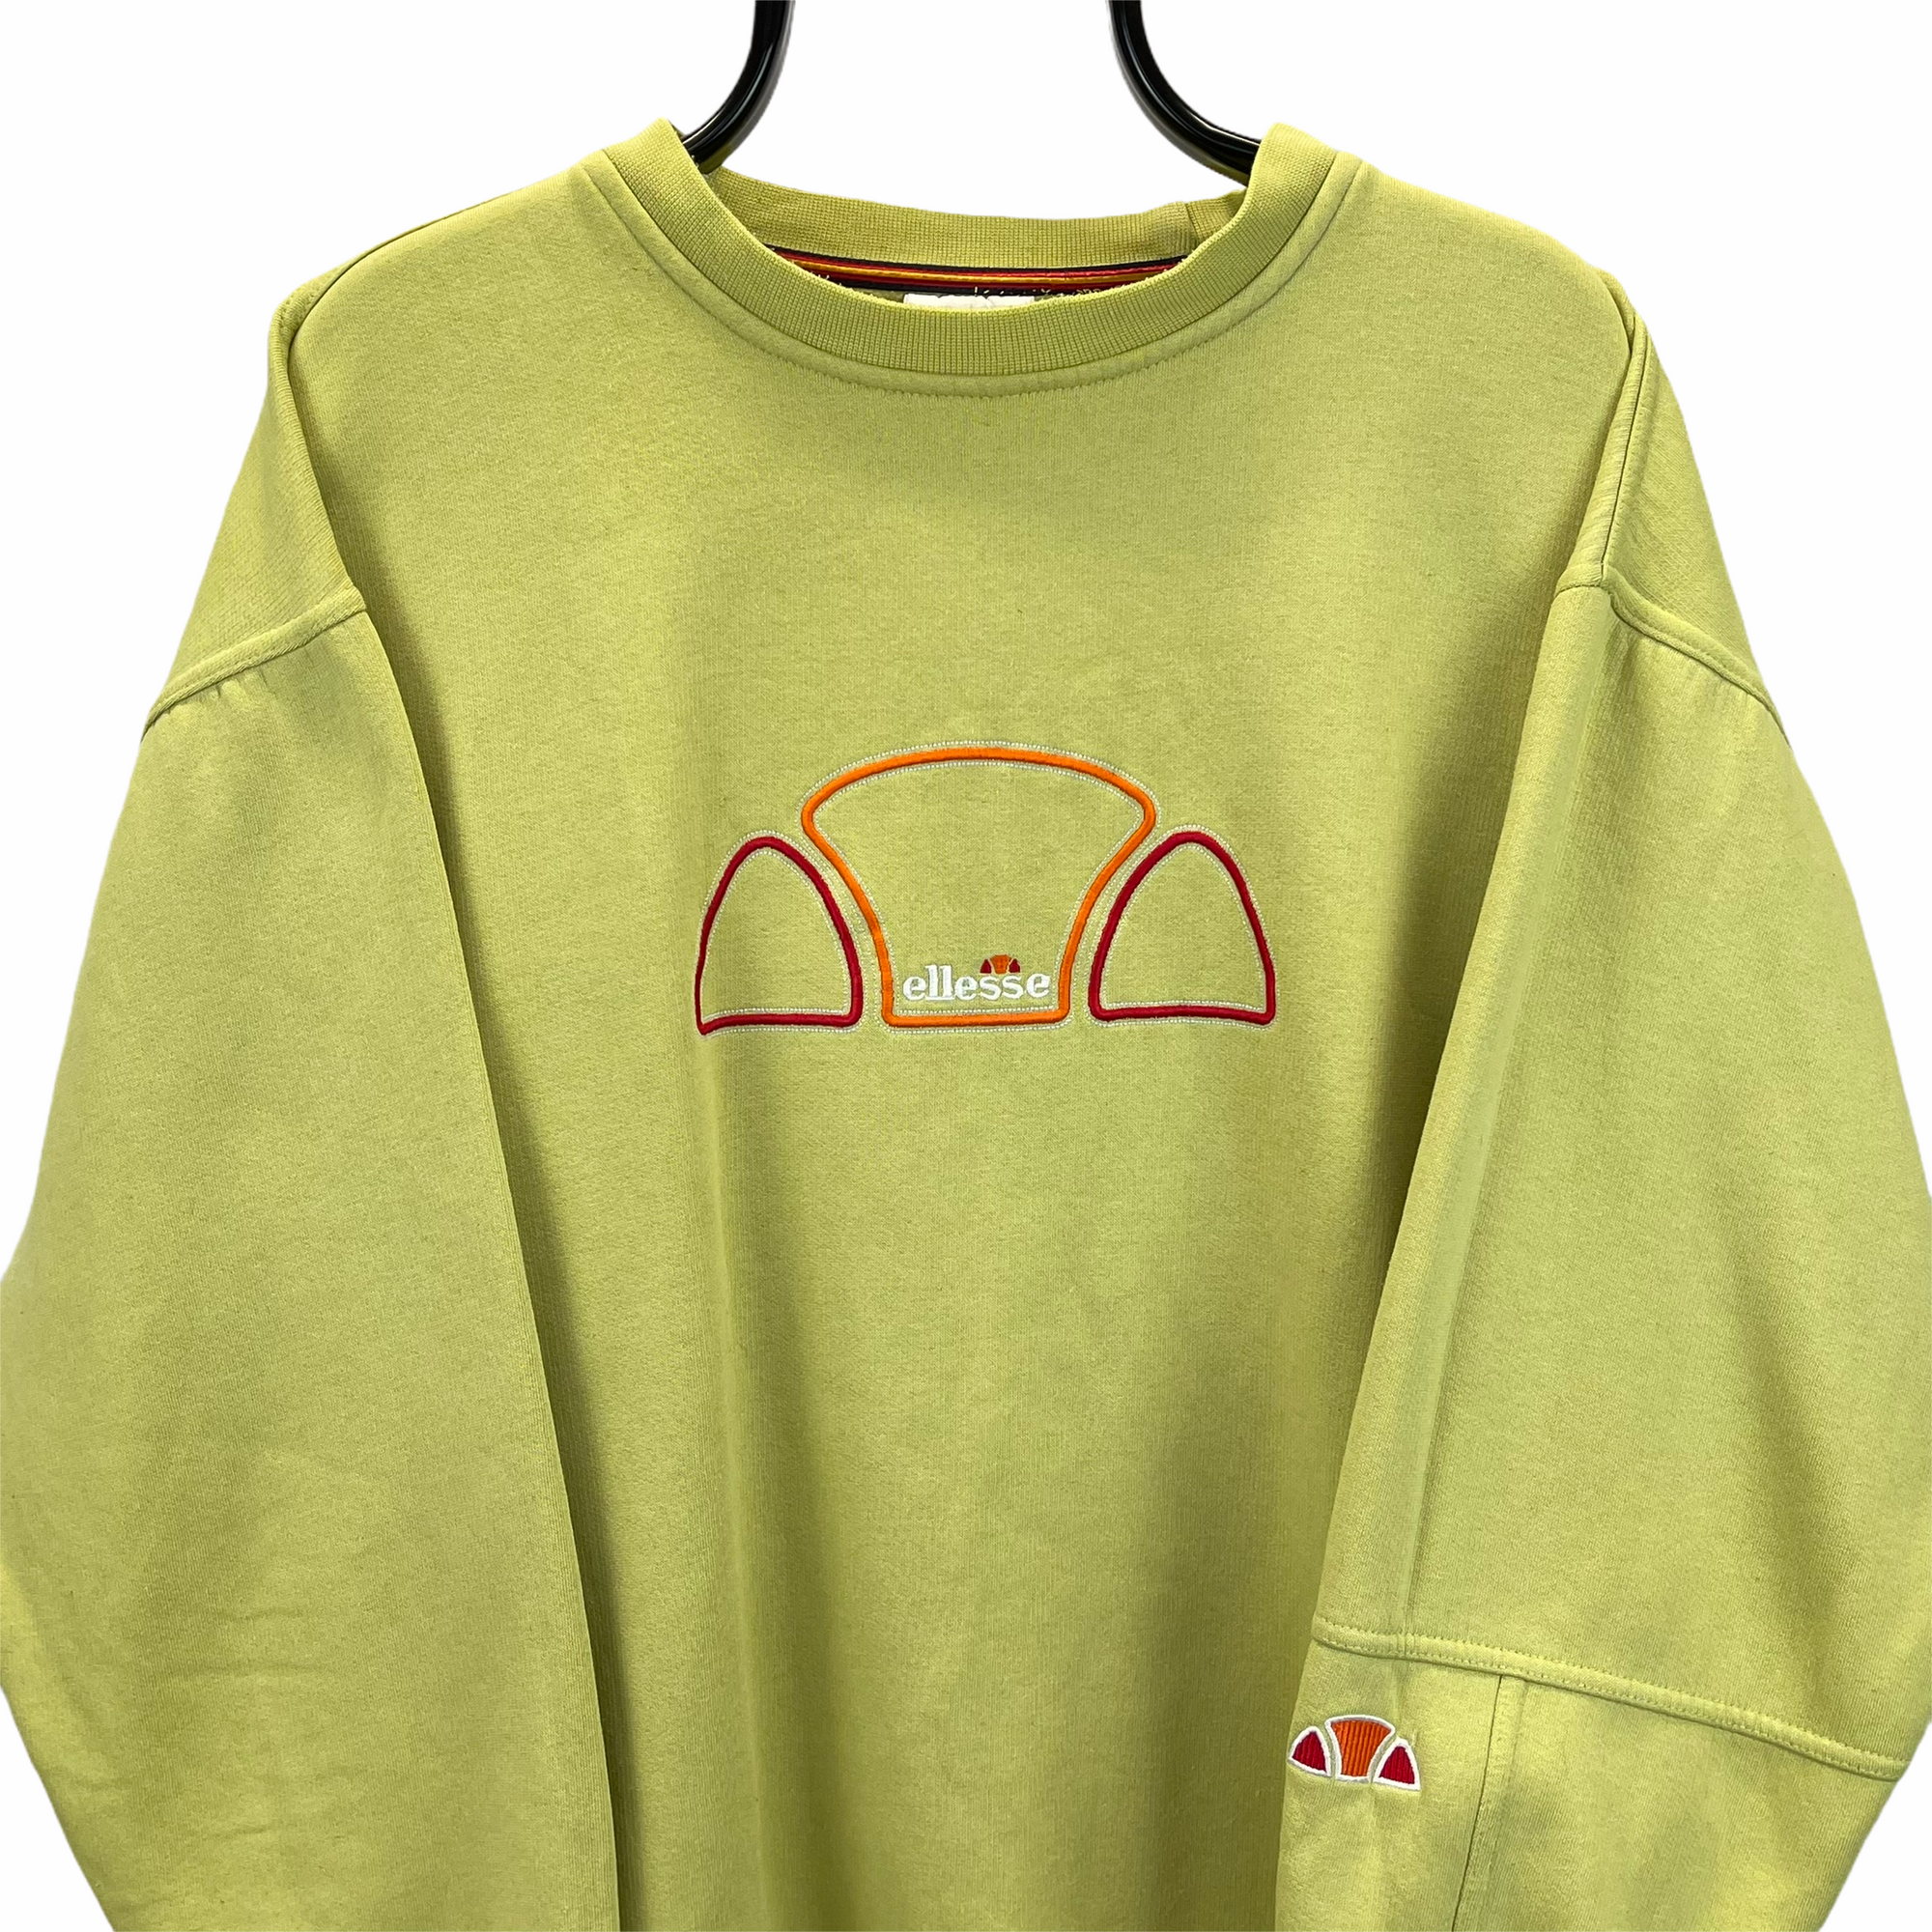 Vintage 90s Ellesse Spellout Sweatshirt in Yellow - Men's Large/Women's XL